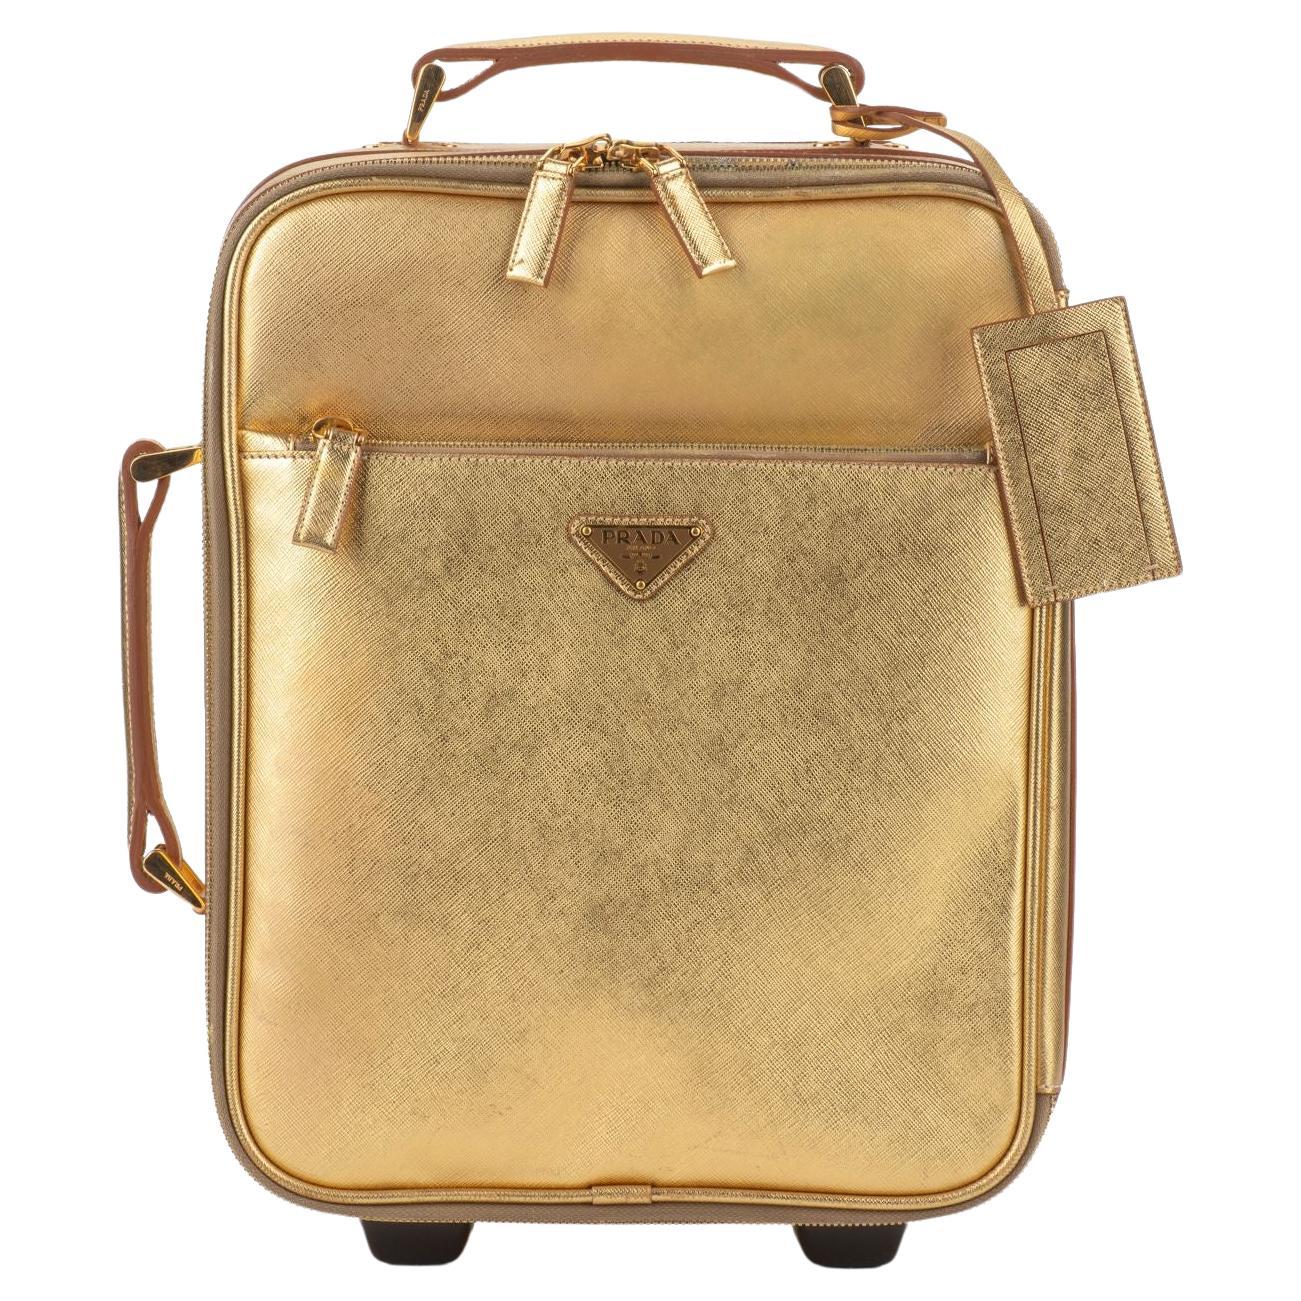 Prada Gold Saffiano Small Carry On Bag For Sale